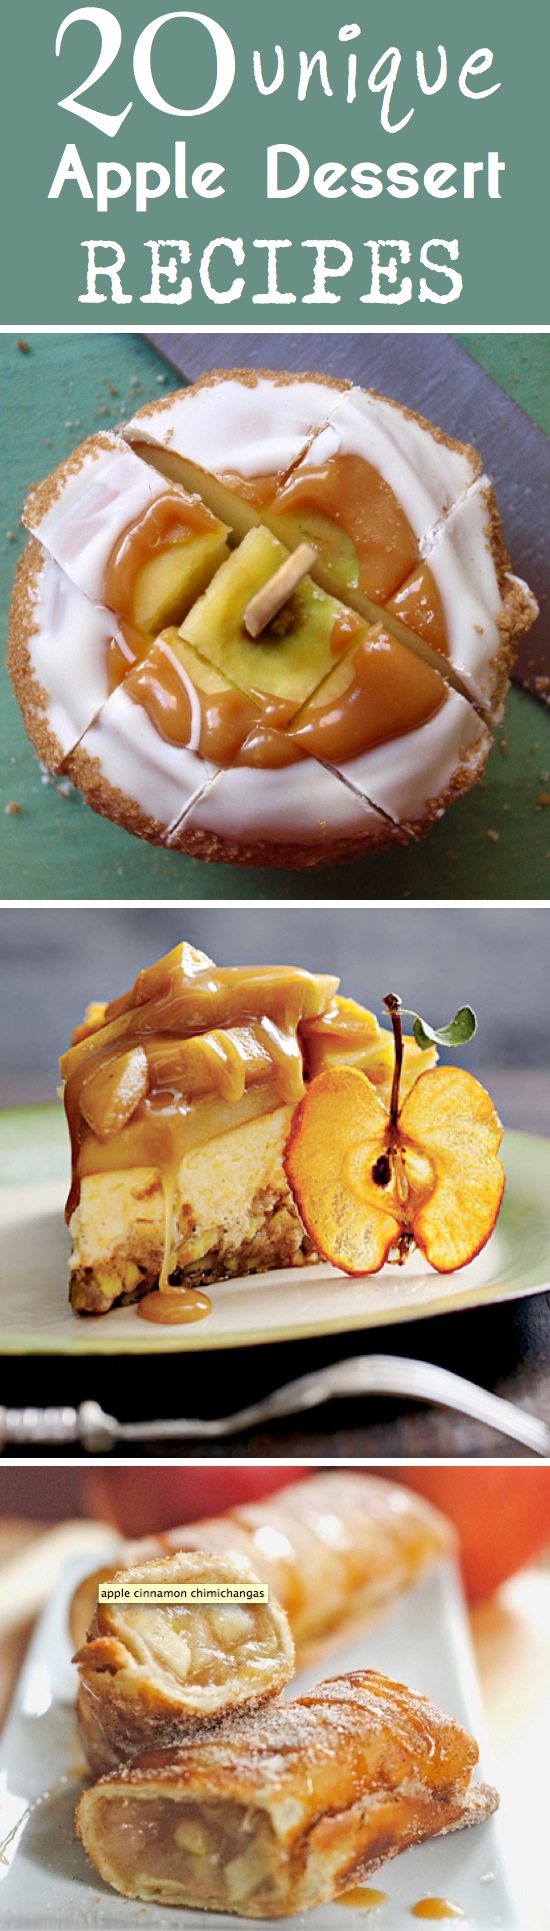 25 Delicious Apple Dessert Recipes - Vrogue